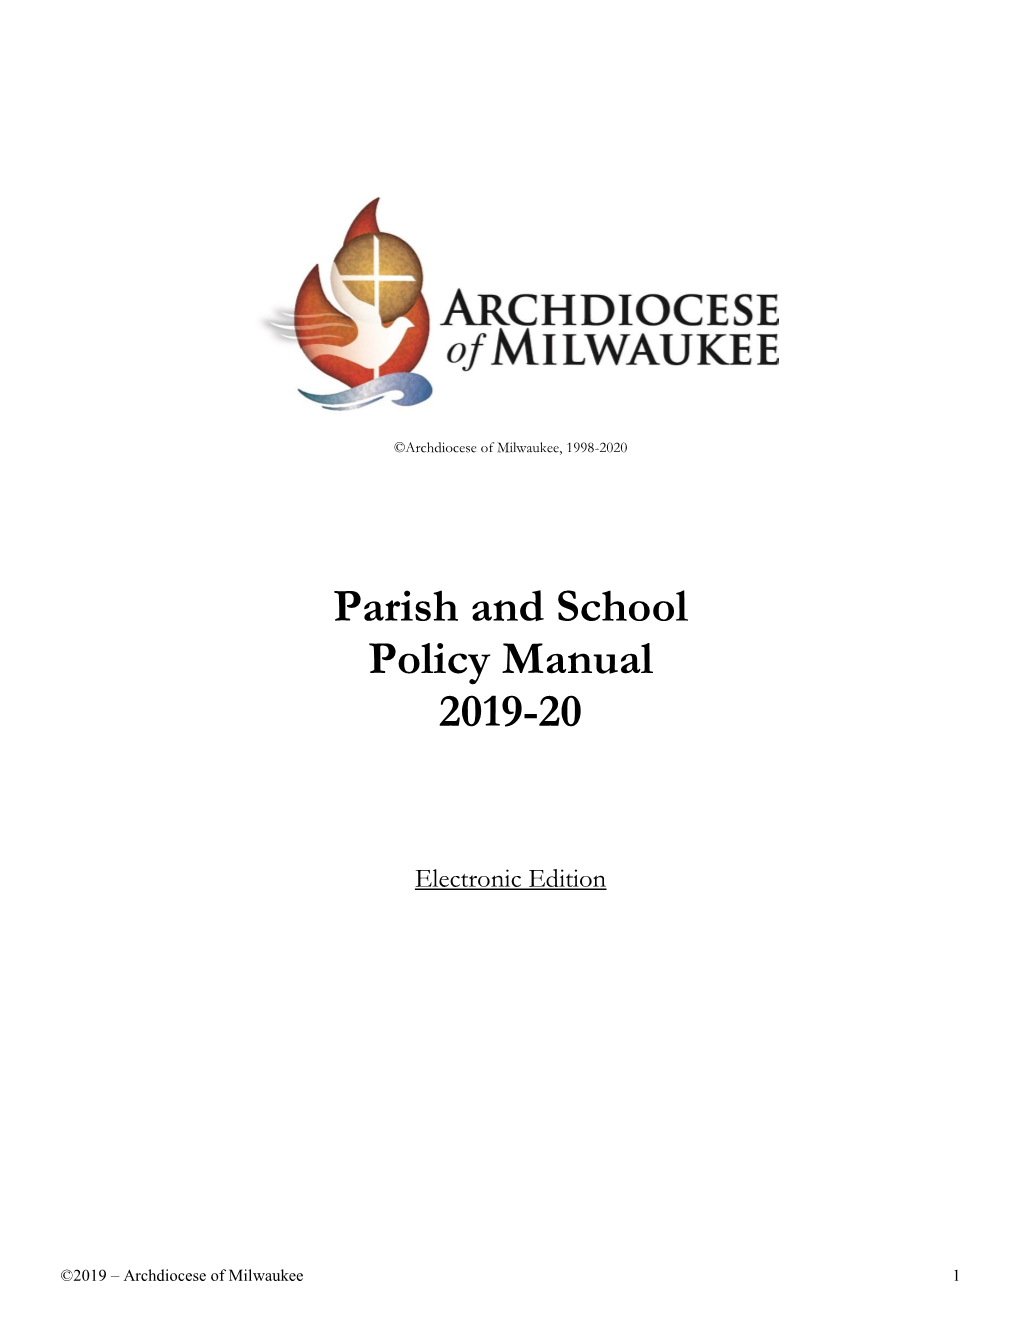 Parish and School Policy Manual 2019-20